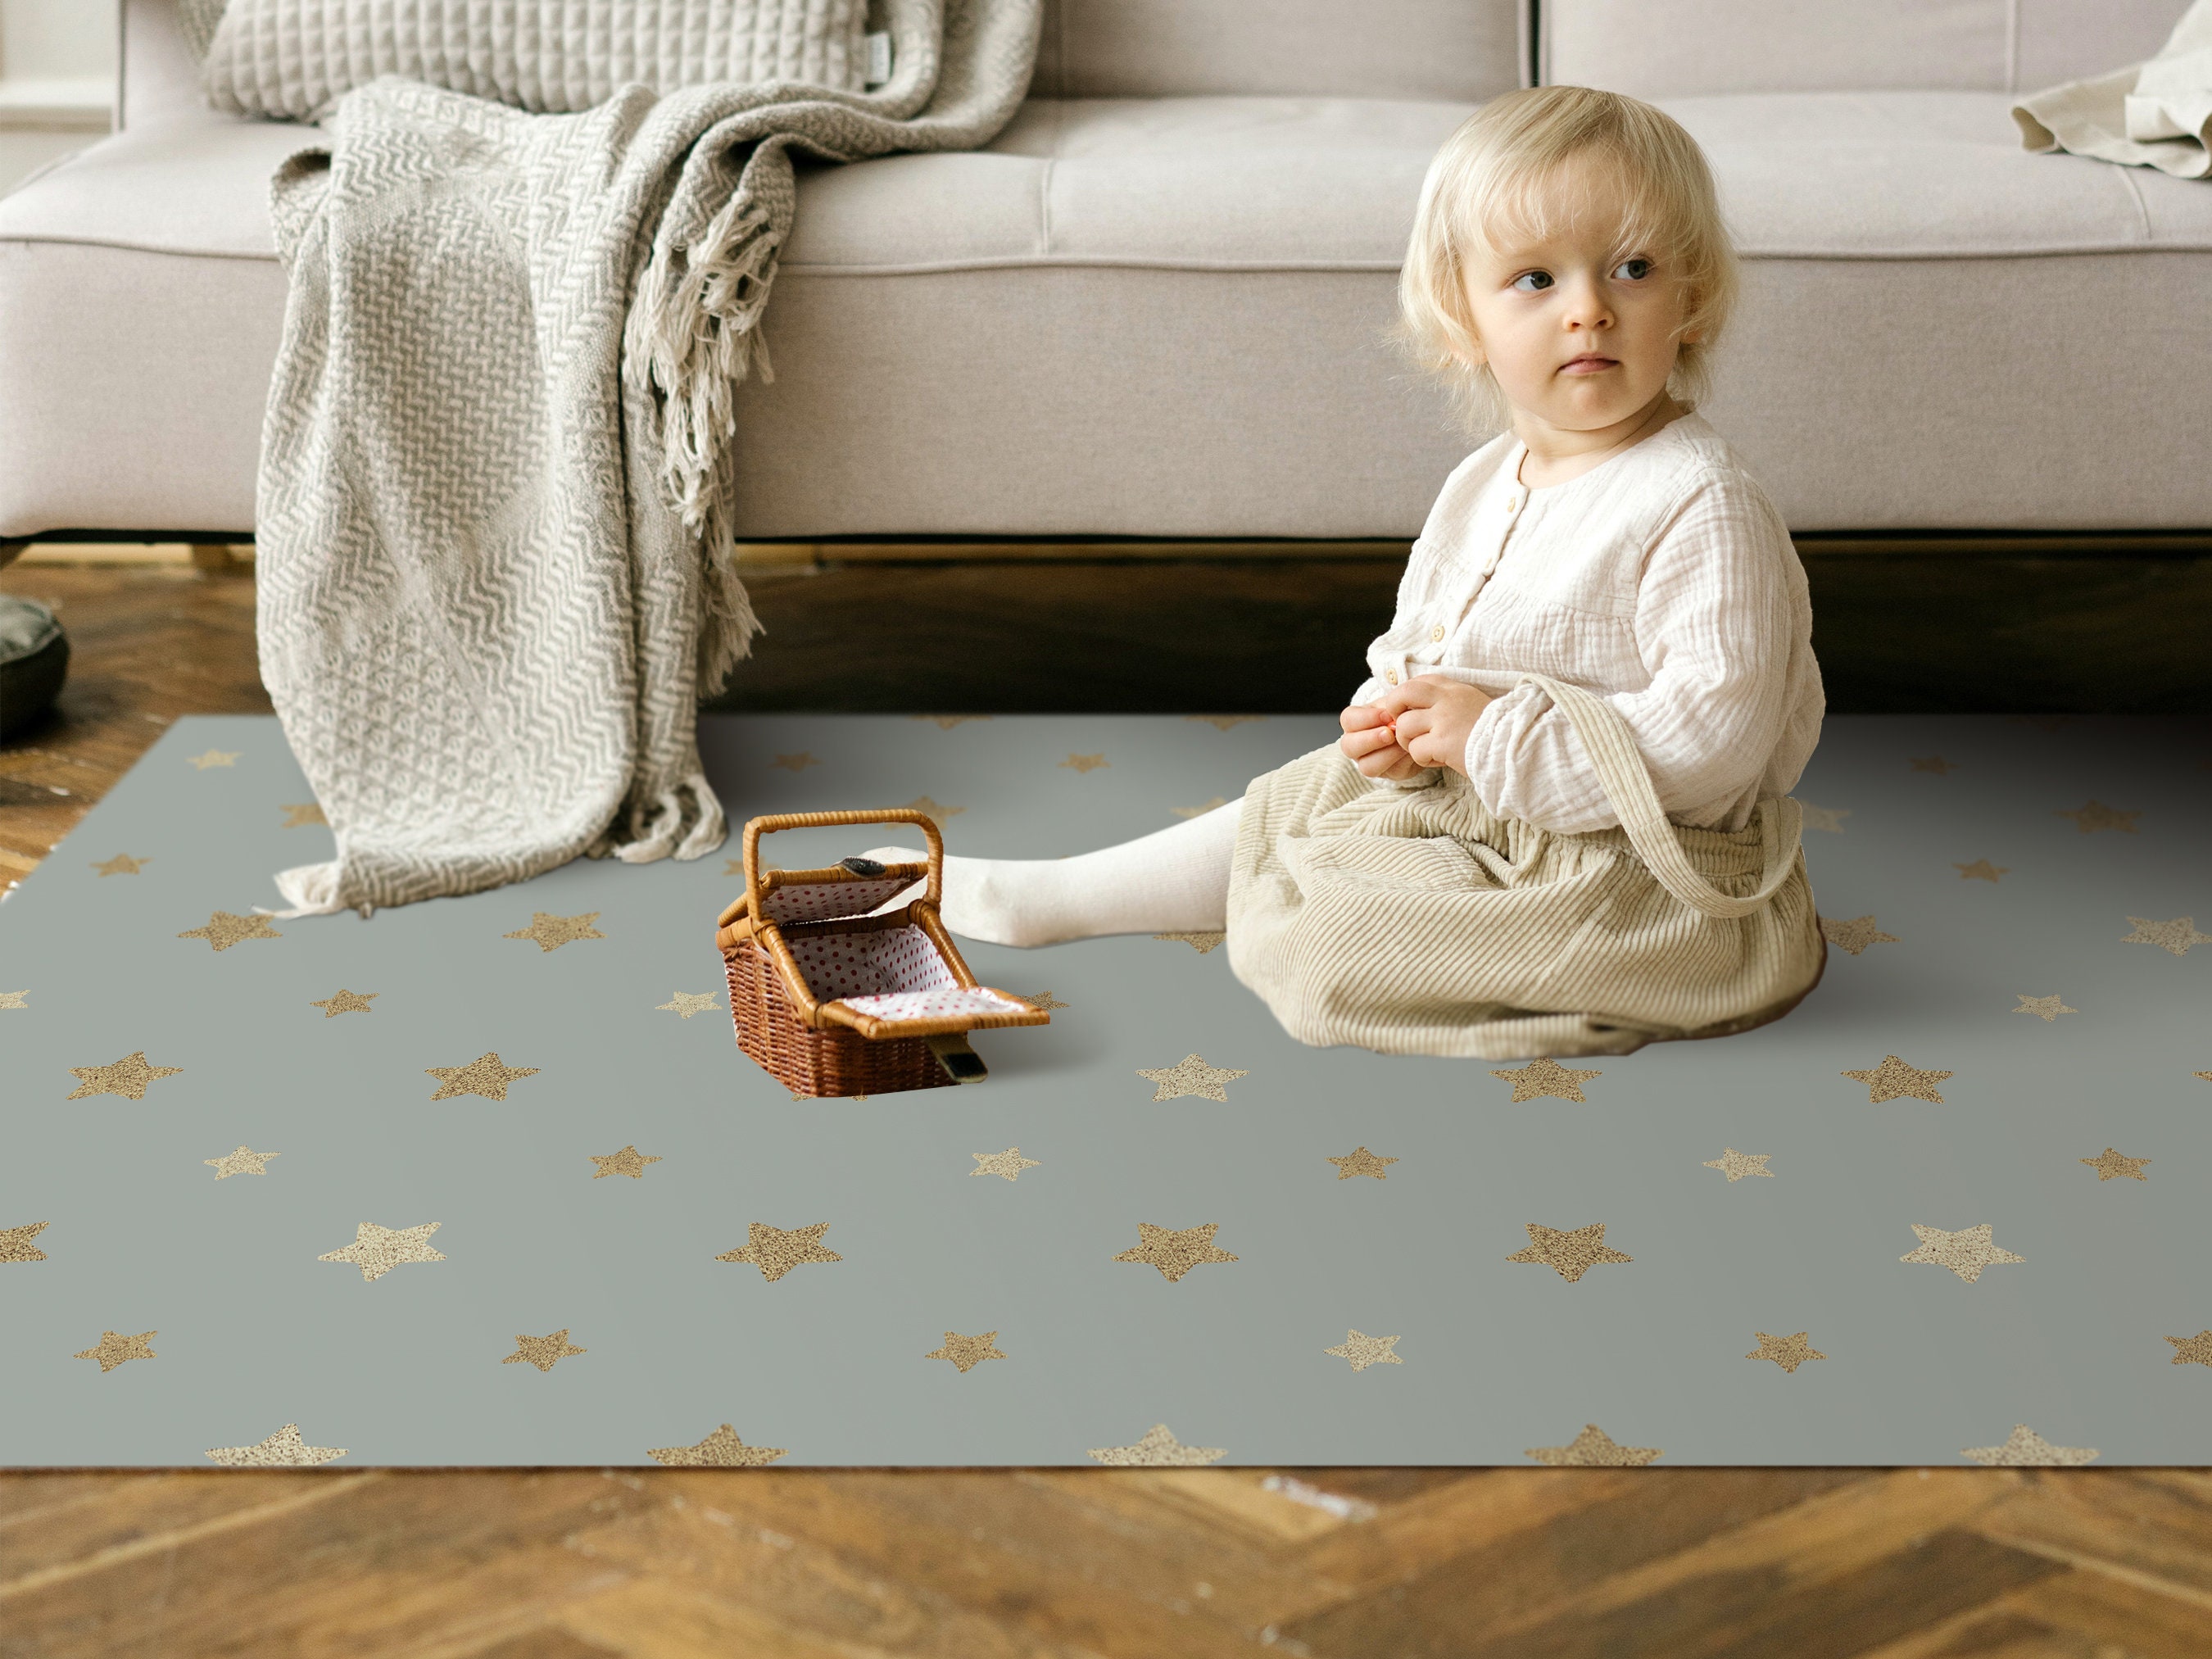 NOVA Art Mat, Grey Vinyl Kids/baby Floor Mat, Star Pattern Design,  Waterproof Floor Mat, Vinyl Area Rug, Home Ideas, Nursery, Playroom 